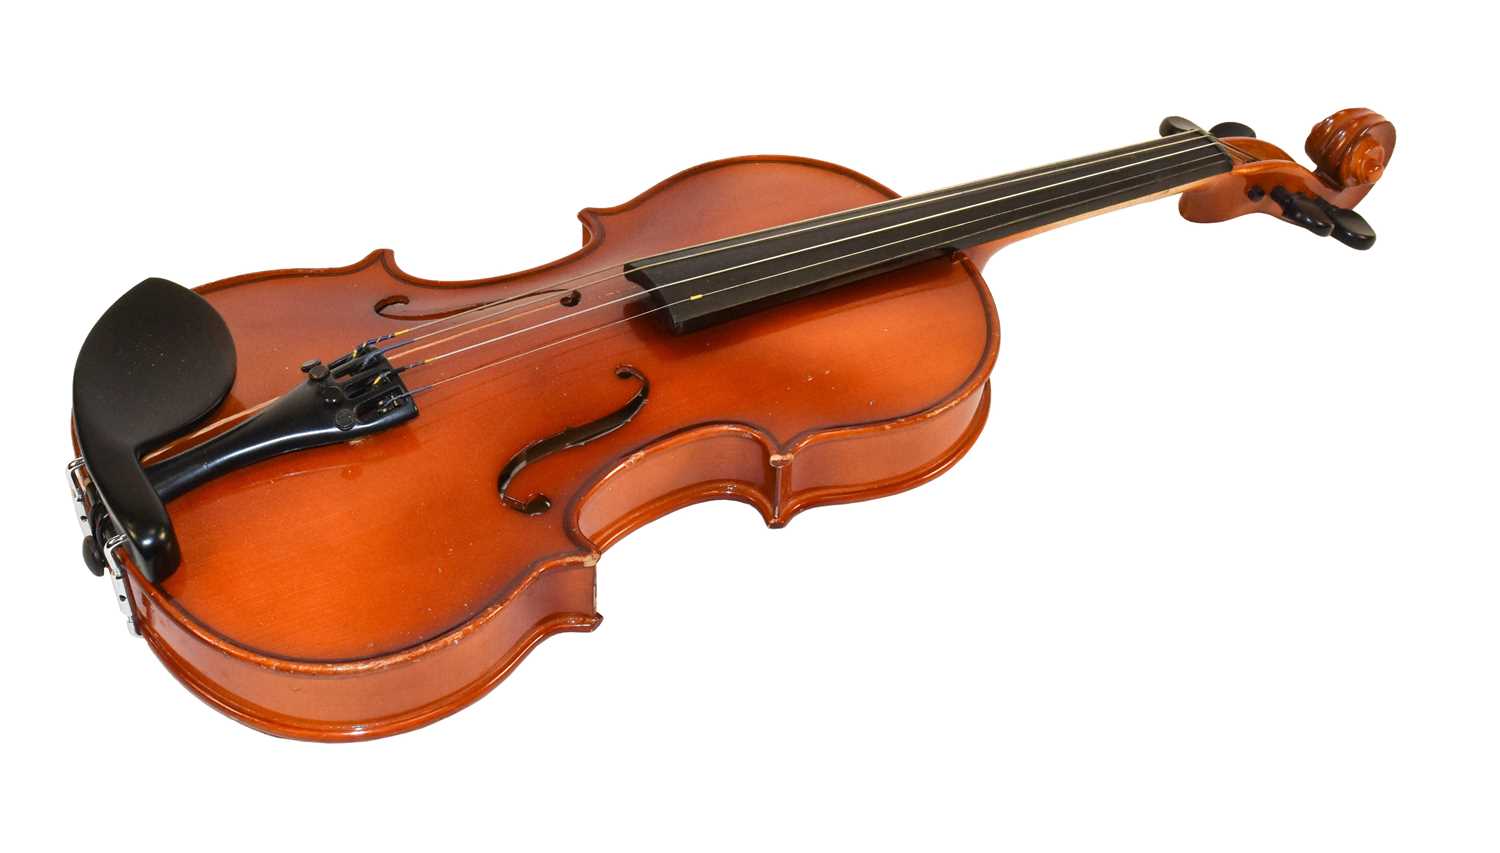 Lot 2 - Violin